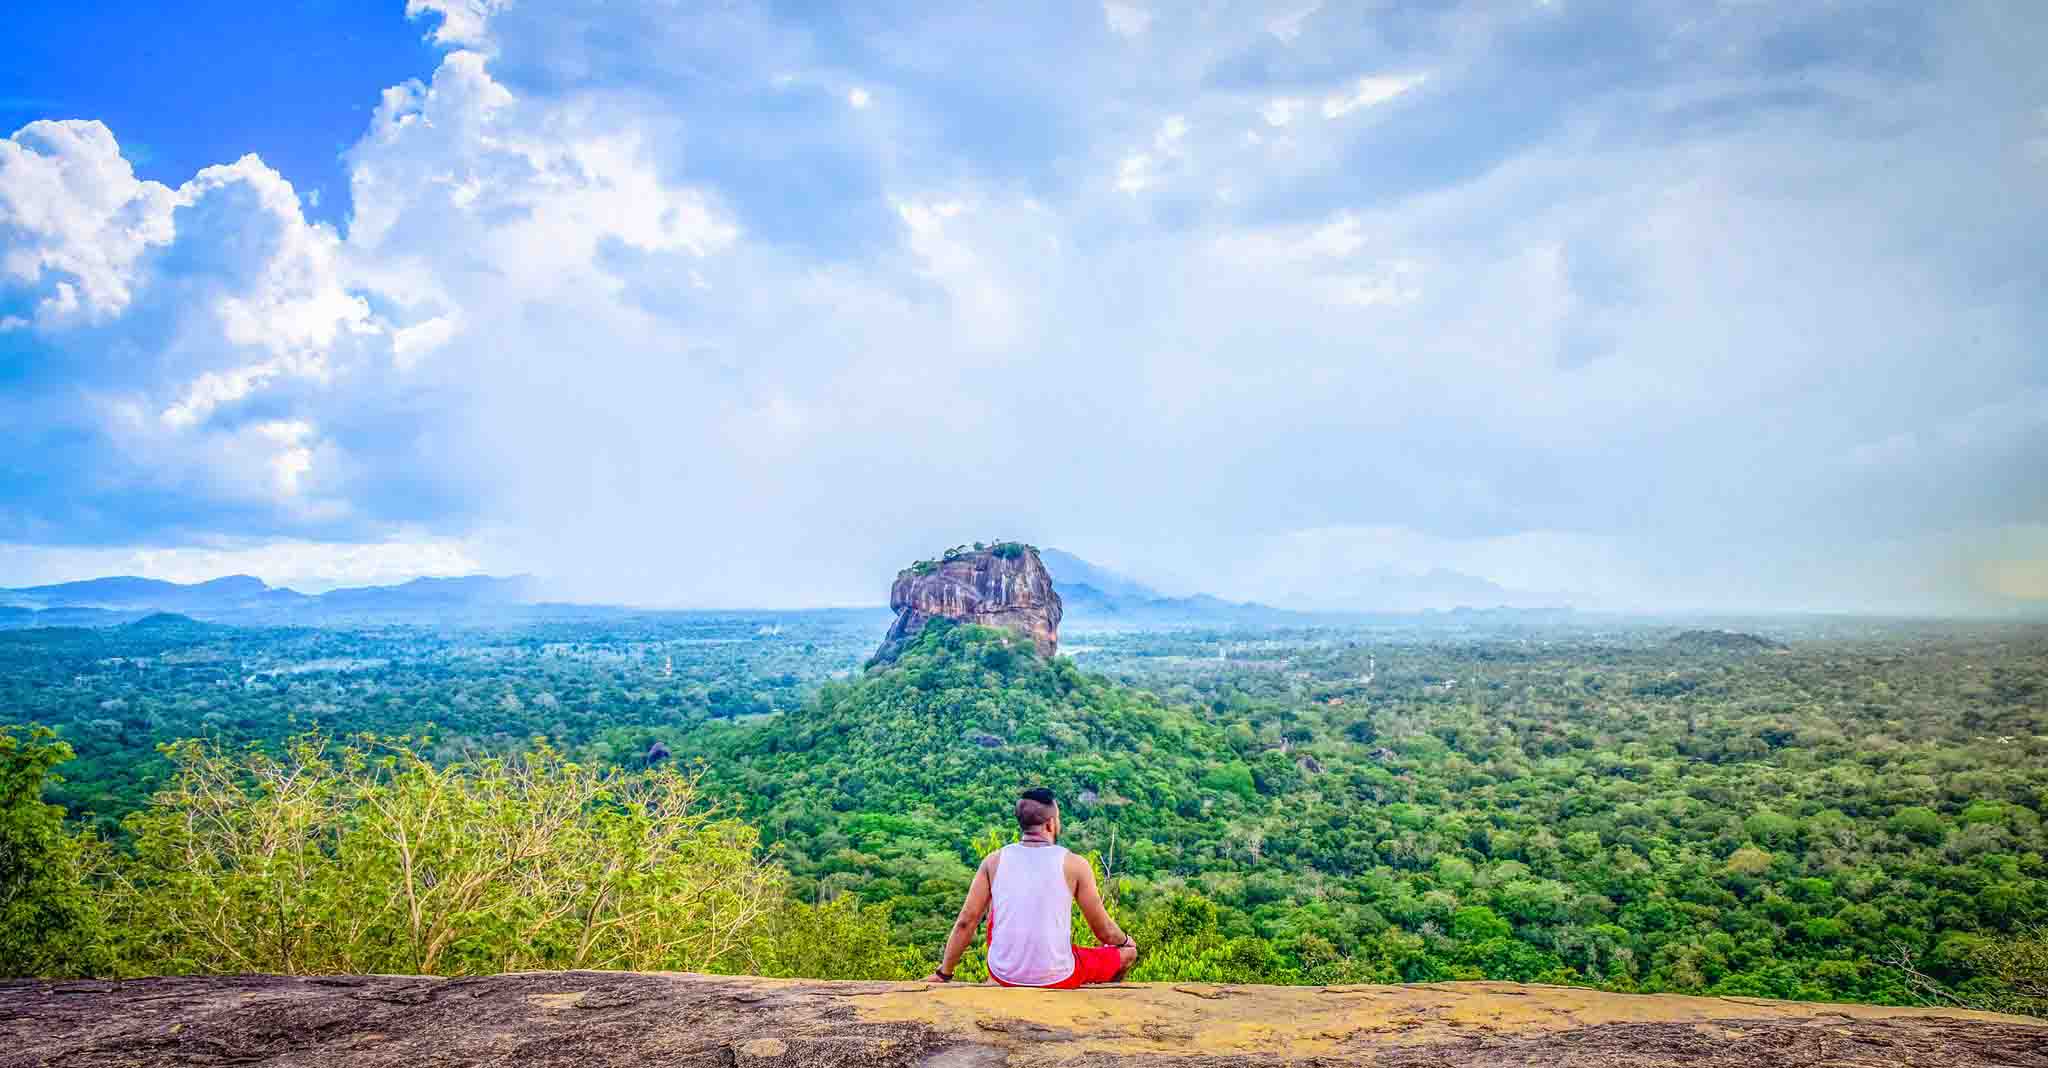 Piduragala Rock in Sri Lanka. The View towards Sigiriya Rock.